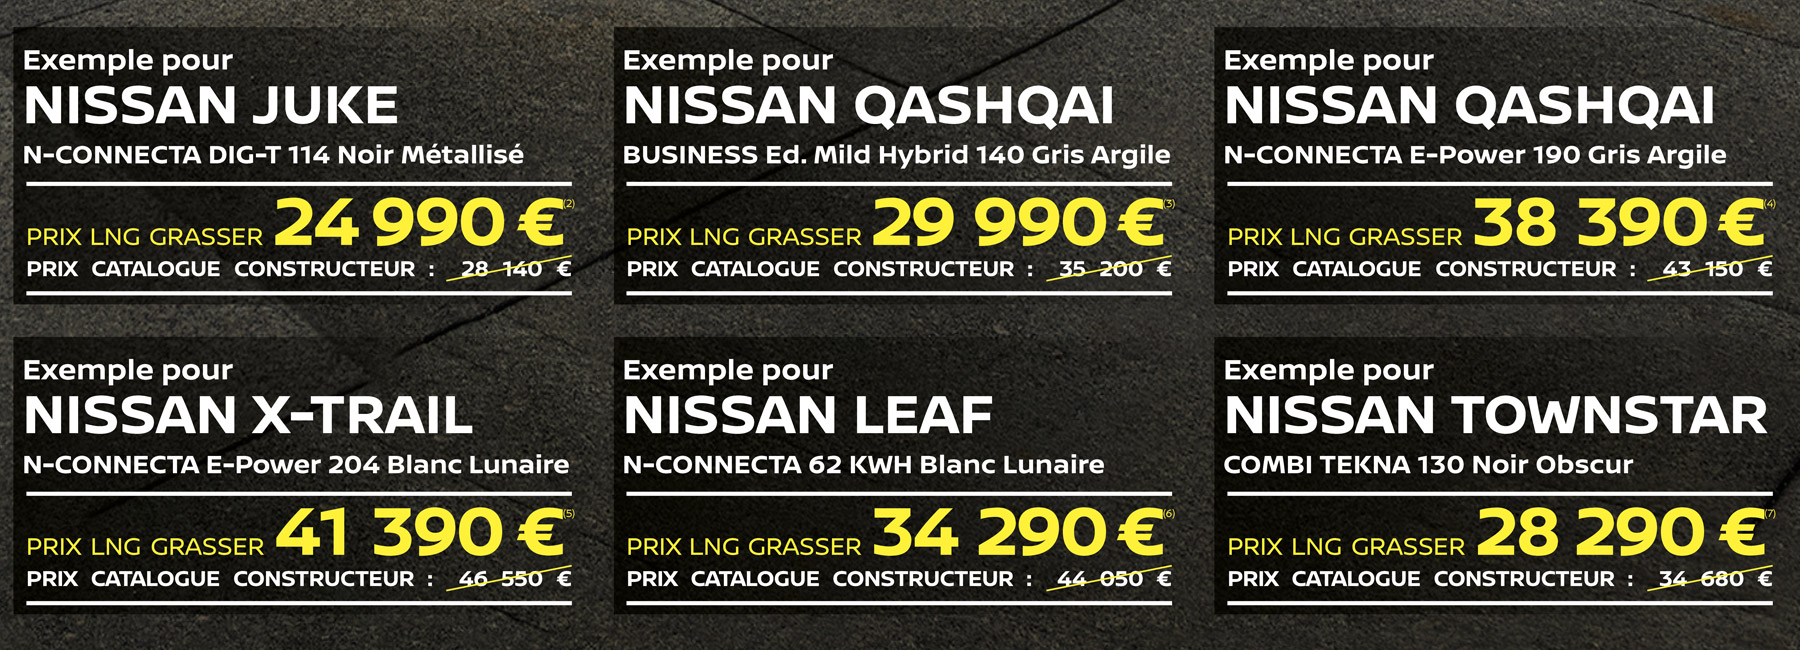 Nissan Qashqai : les tarifs - Challenges